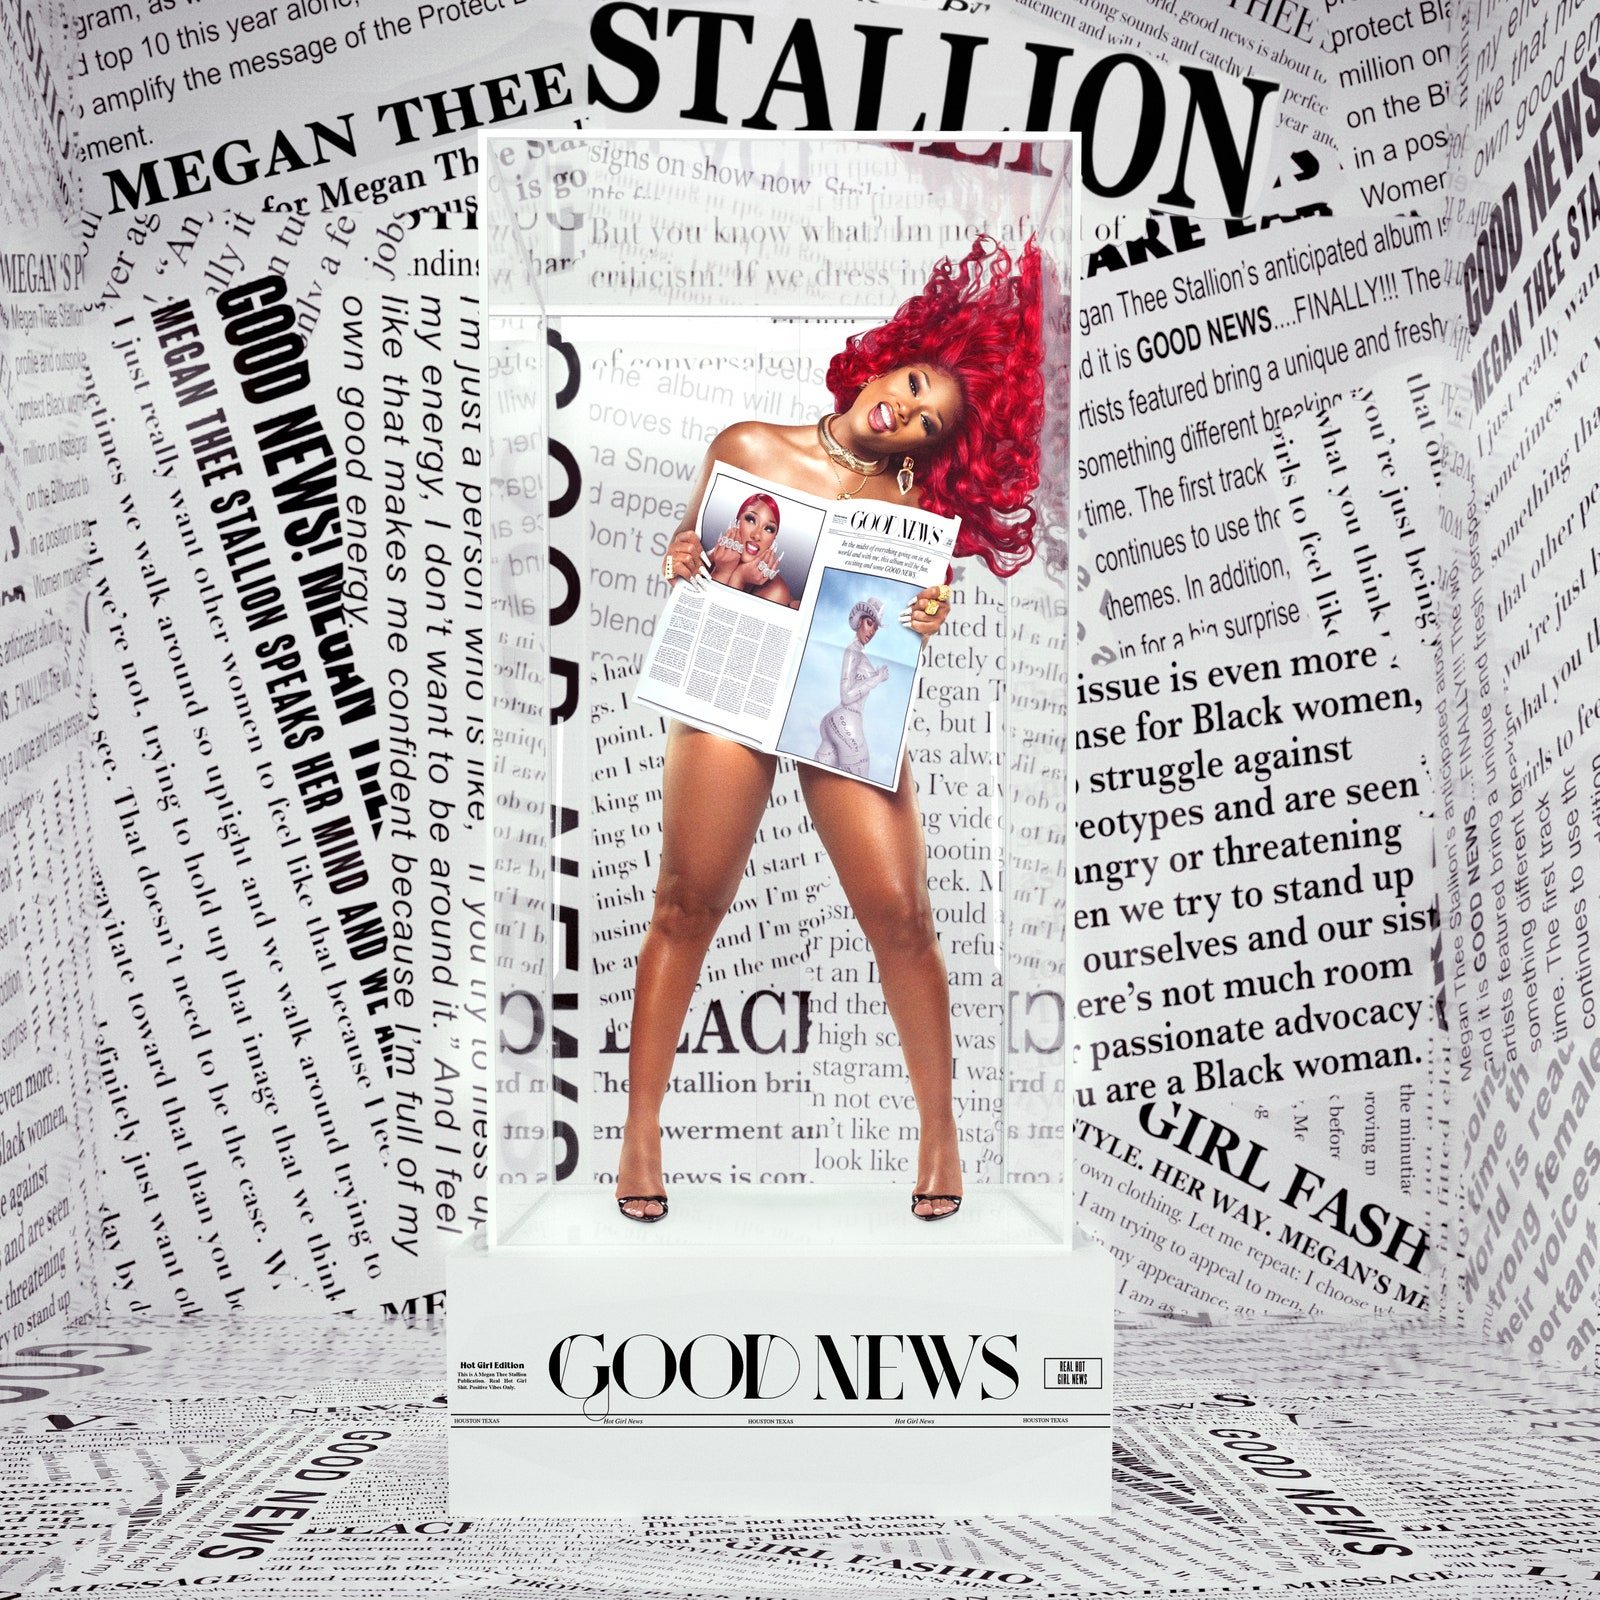  Megan Thee Stallion – Good News [300 Entertainment]